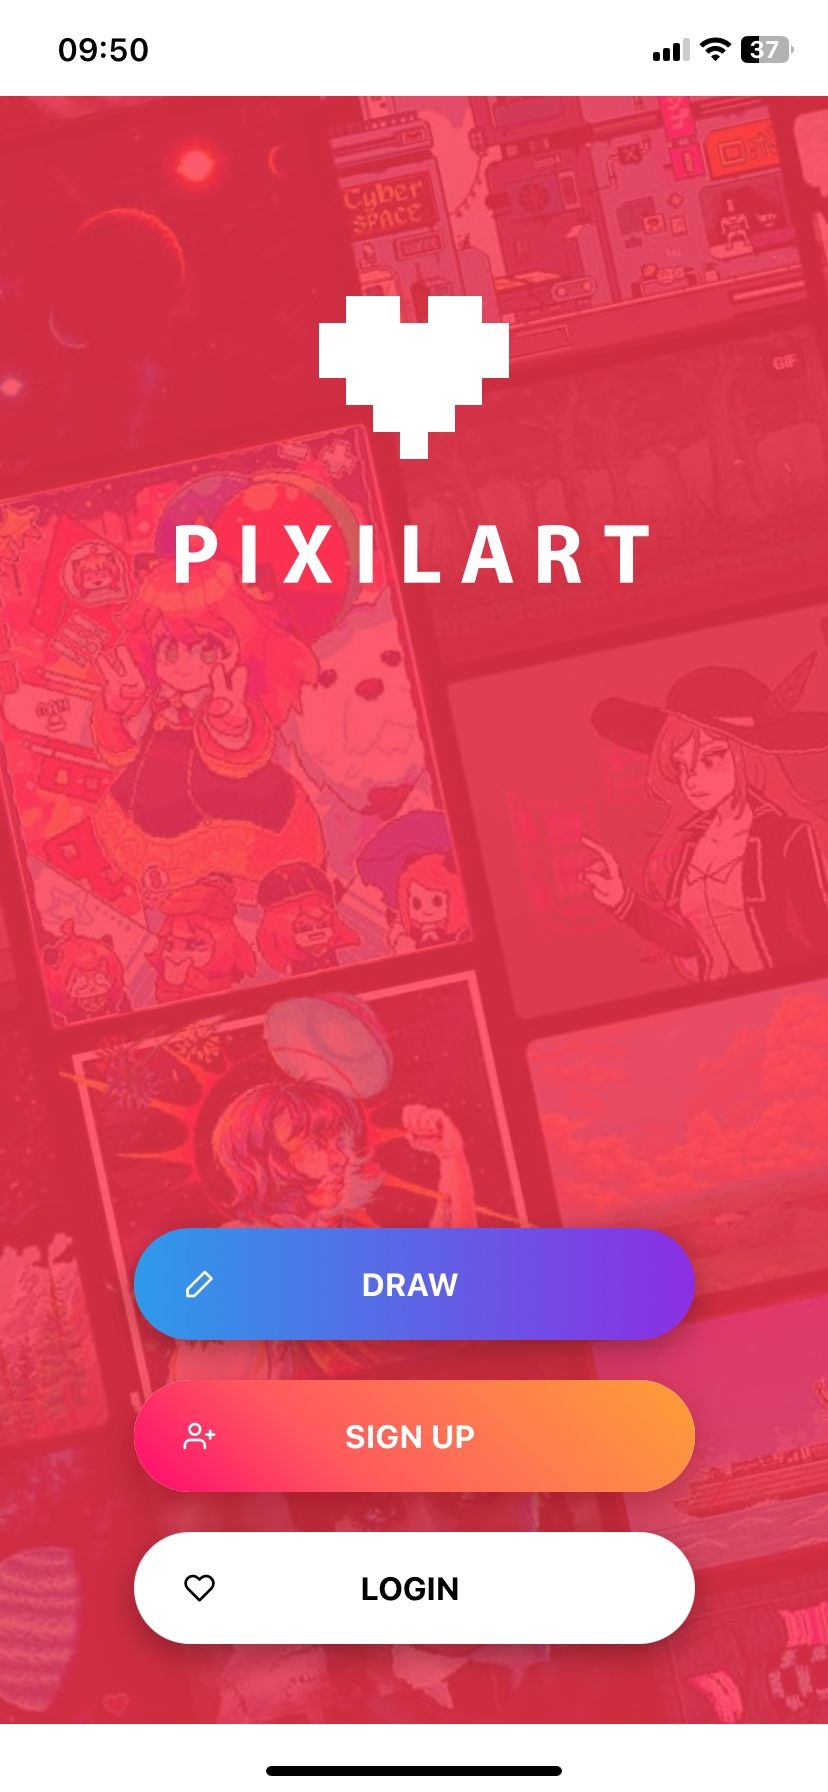 Pixilart's launch screen